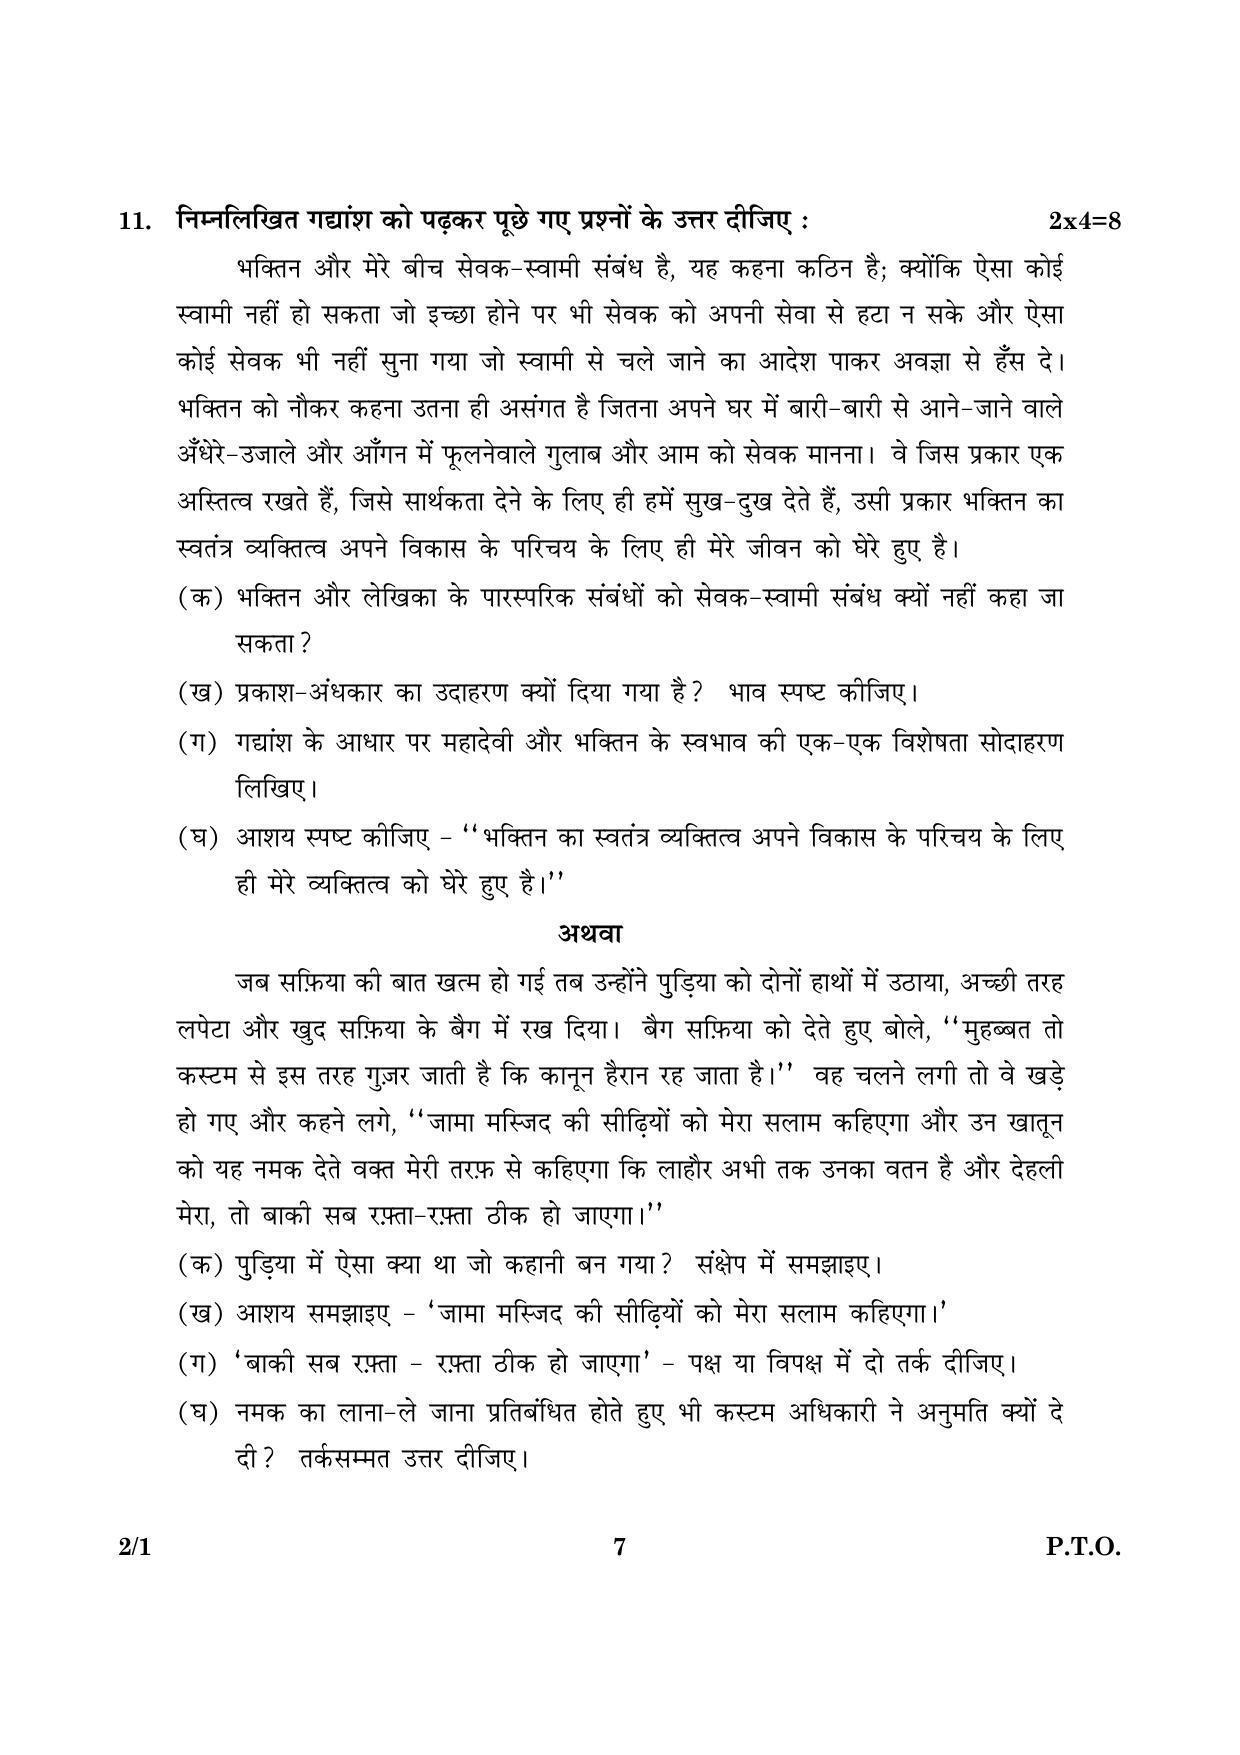 CBSE Class 12 002 Set 1 Hindi (Core) 2016 Question Paper - Page 7